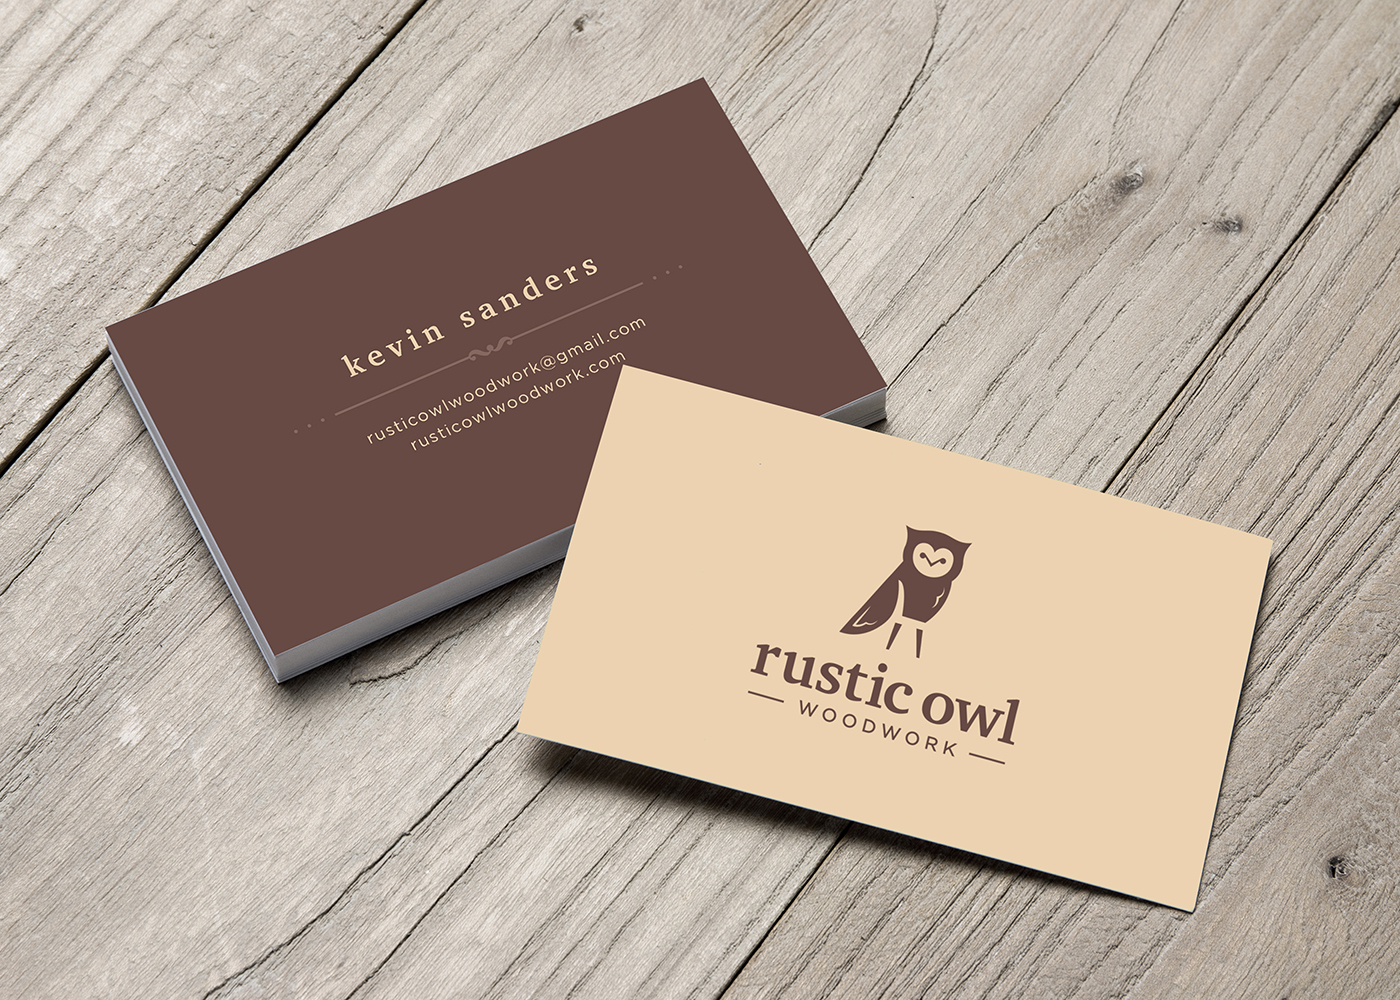 Rustic Owl: Woodwork Business Card Design